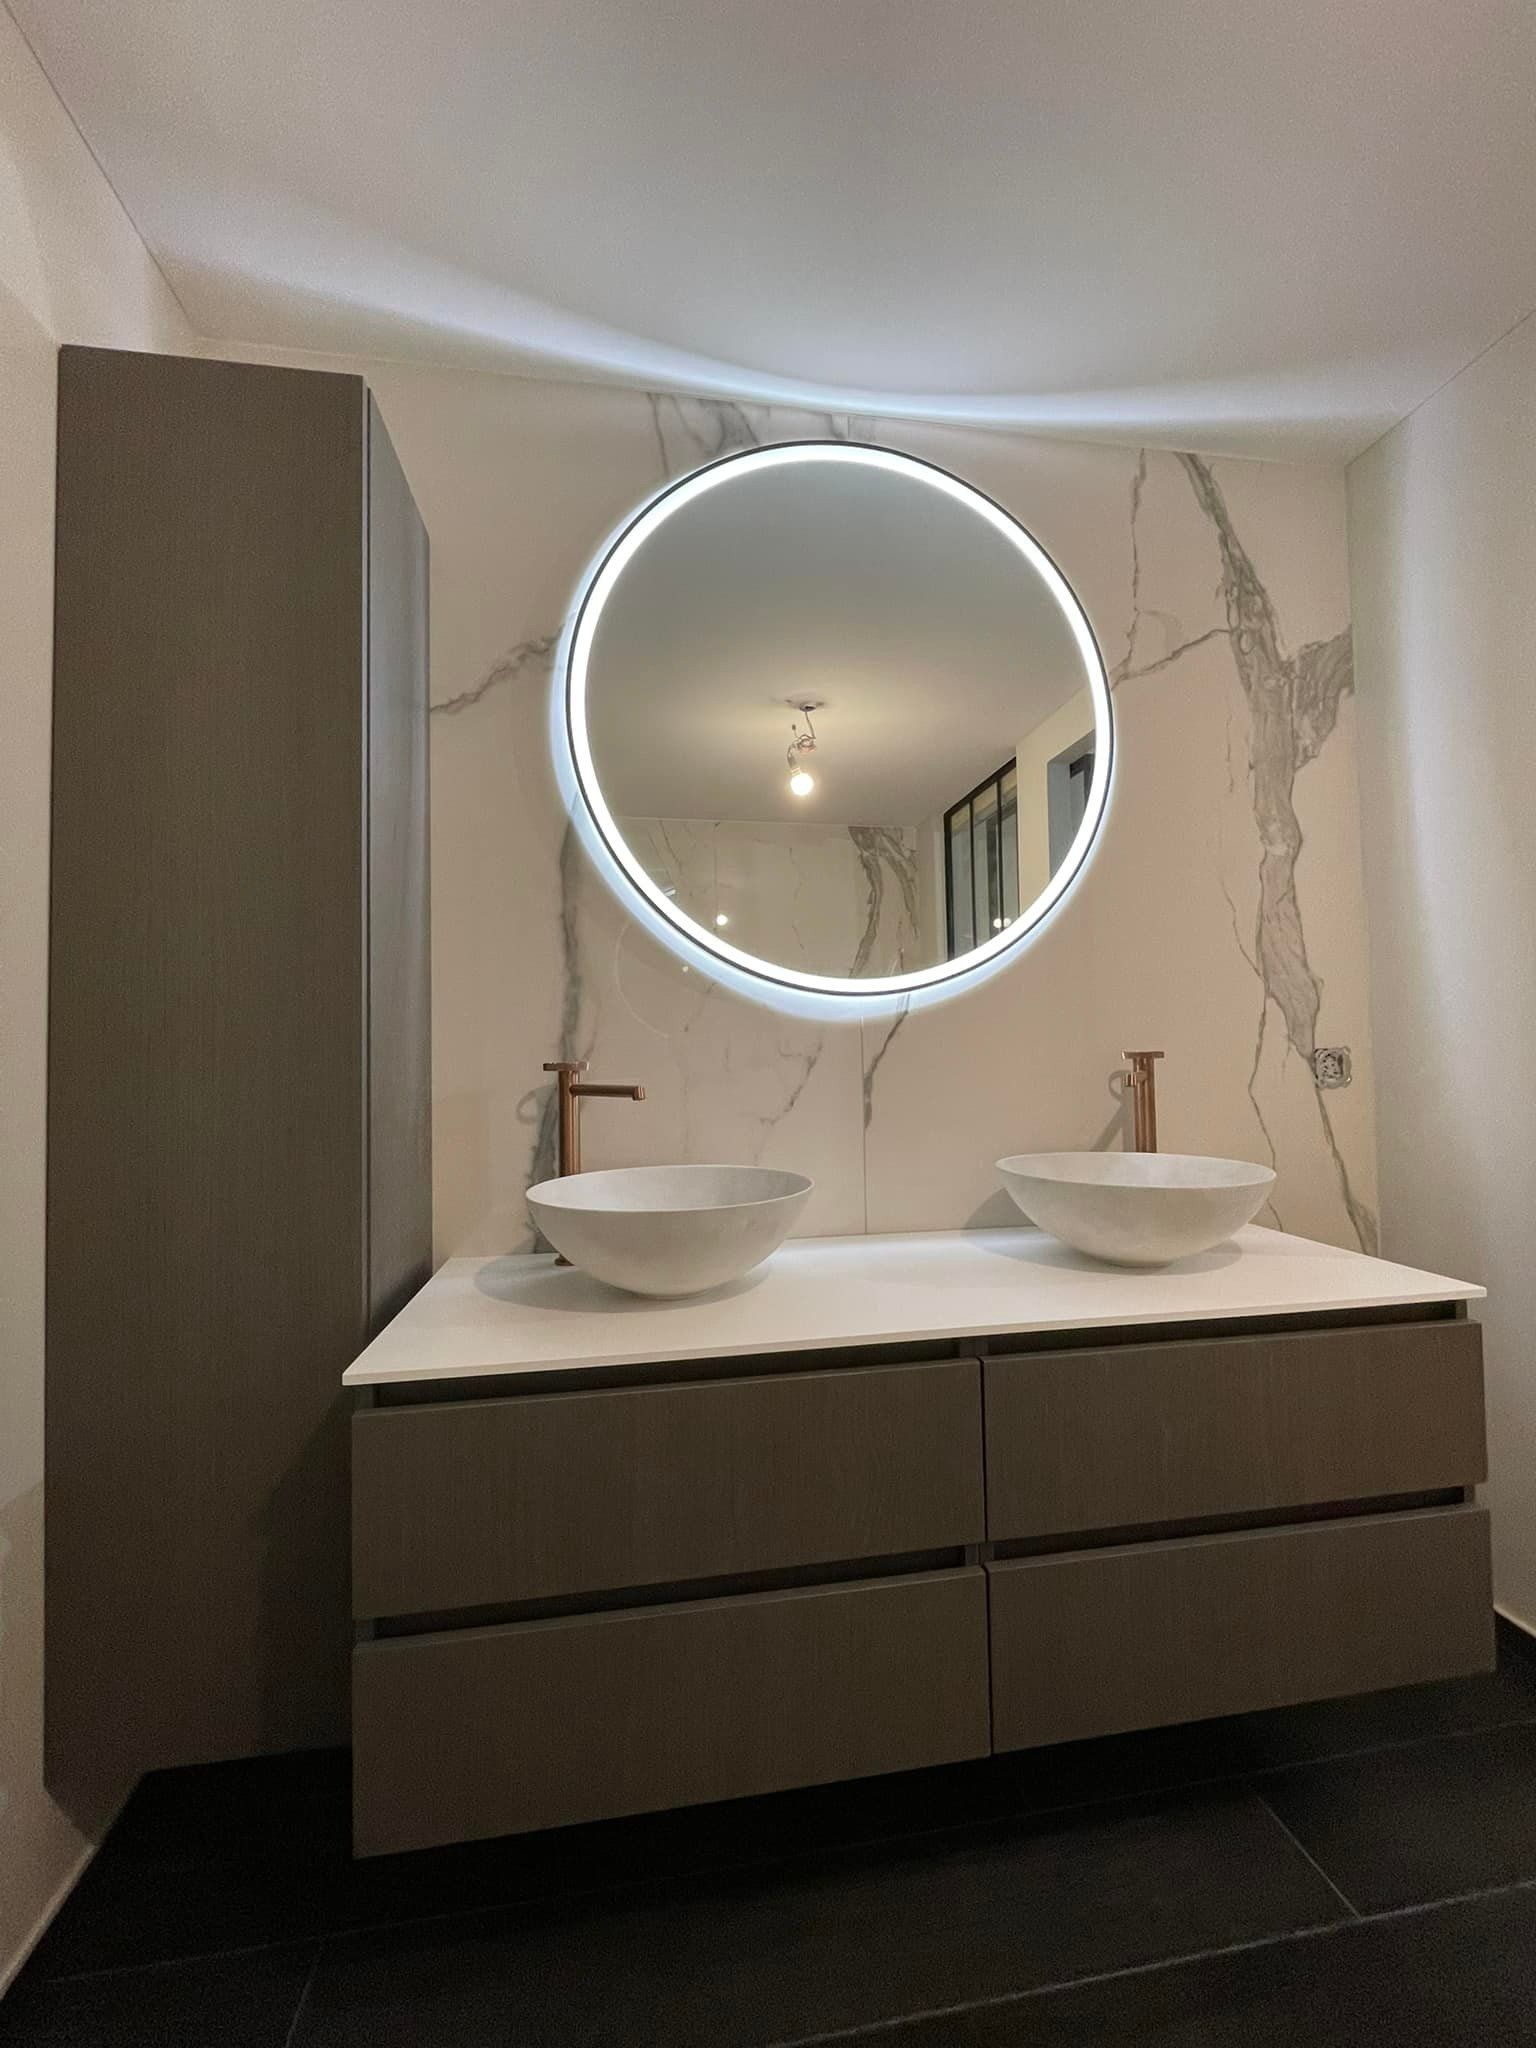 Salle de bain rénovée moderne avec miroir rond